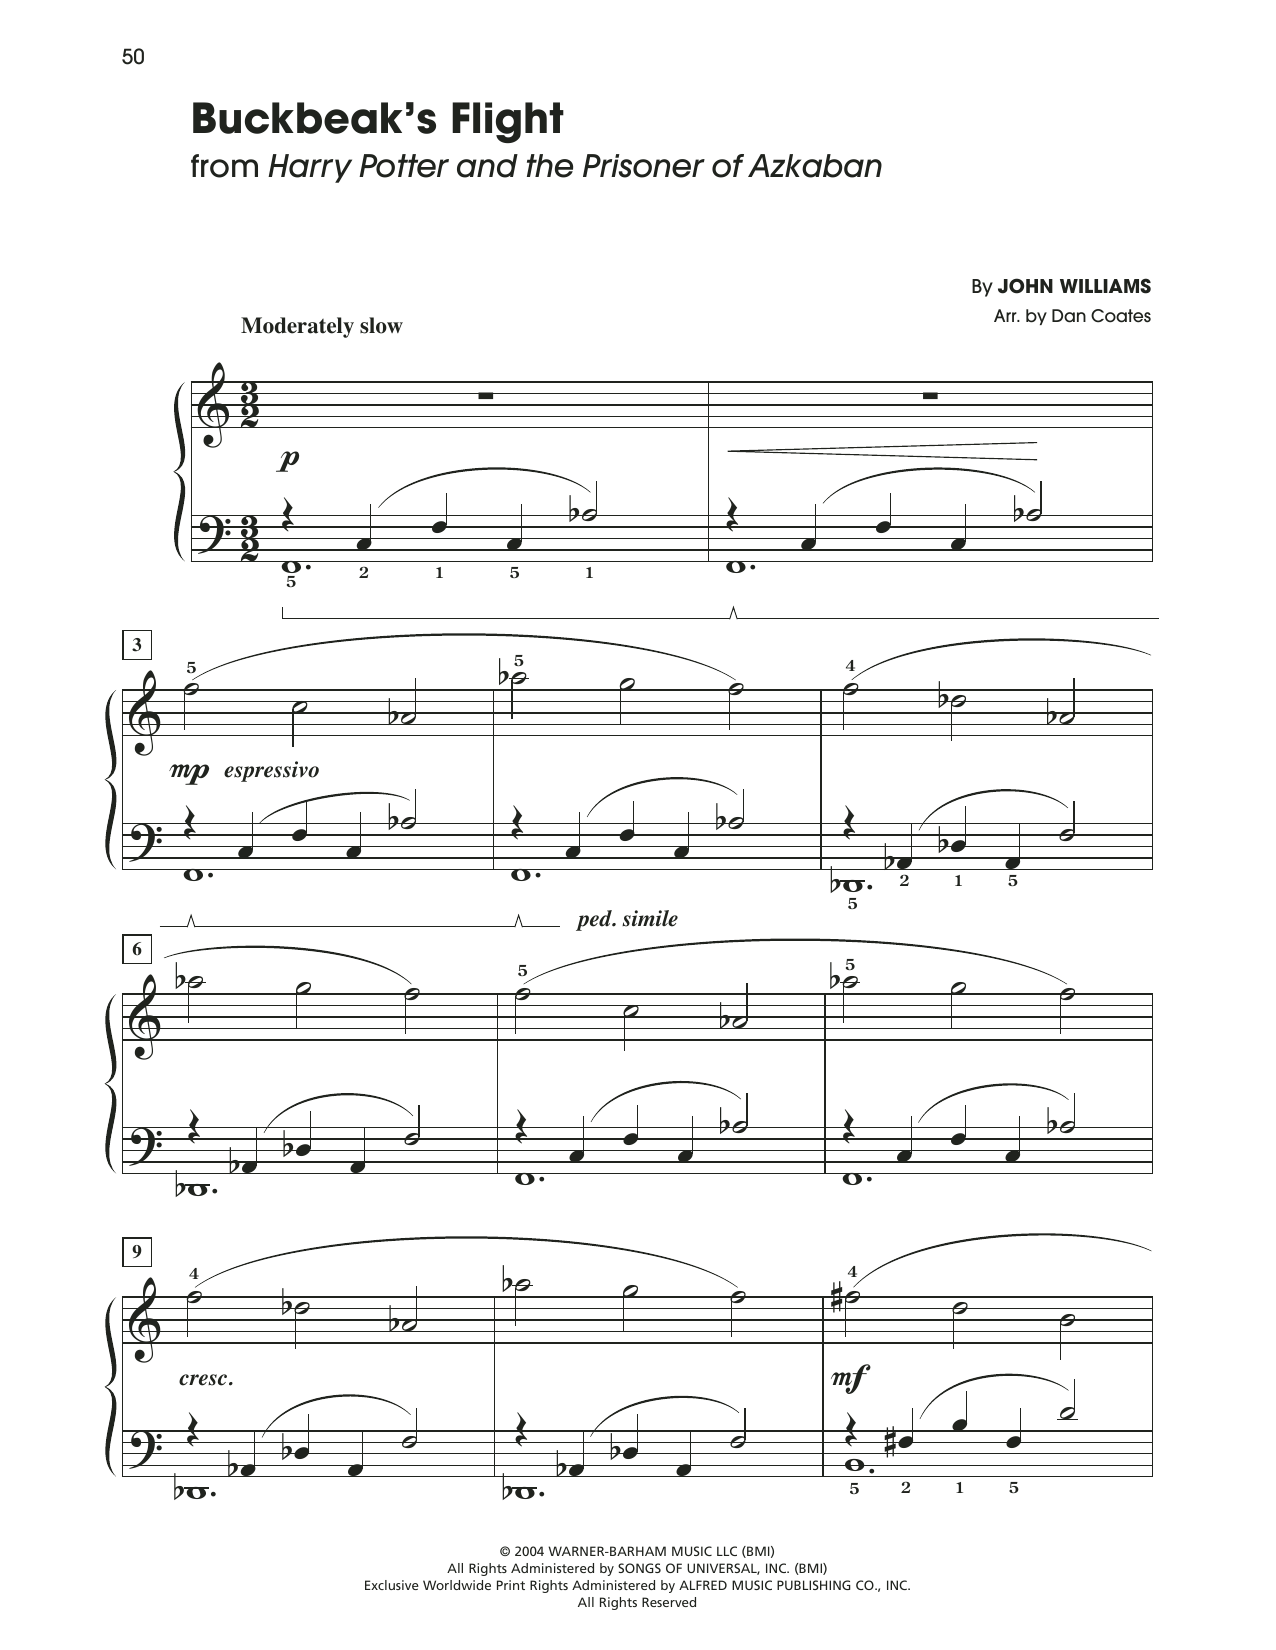 Download John Williams Buckbeak's Flight (from Harry Potter) (arr. Dan Coates) Sheet Music and learn how to play Easy Piano PDF digital score in minutes